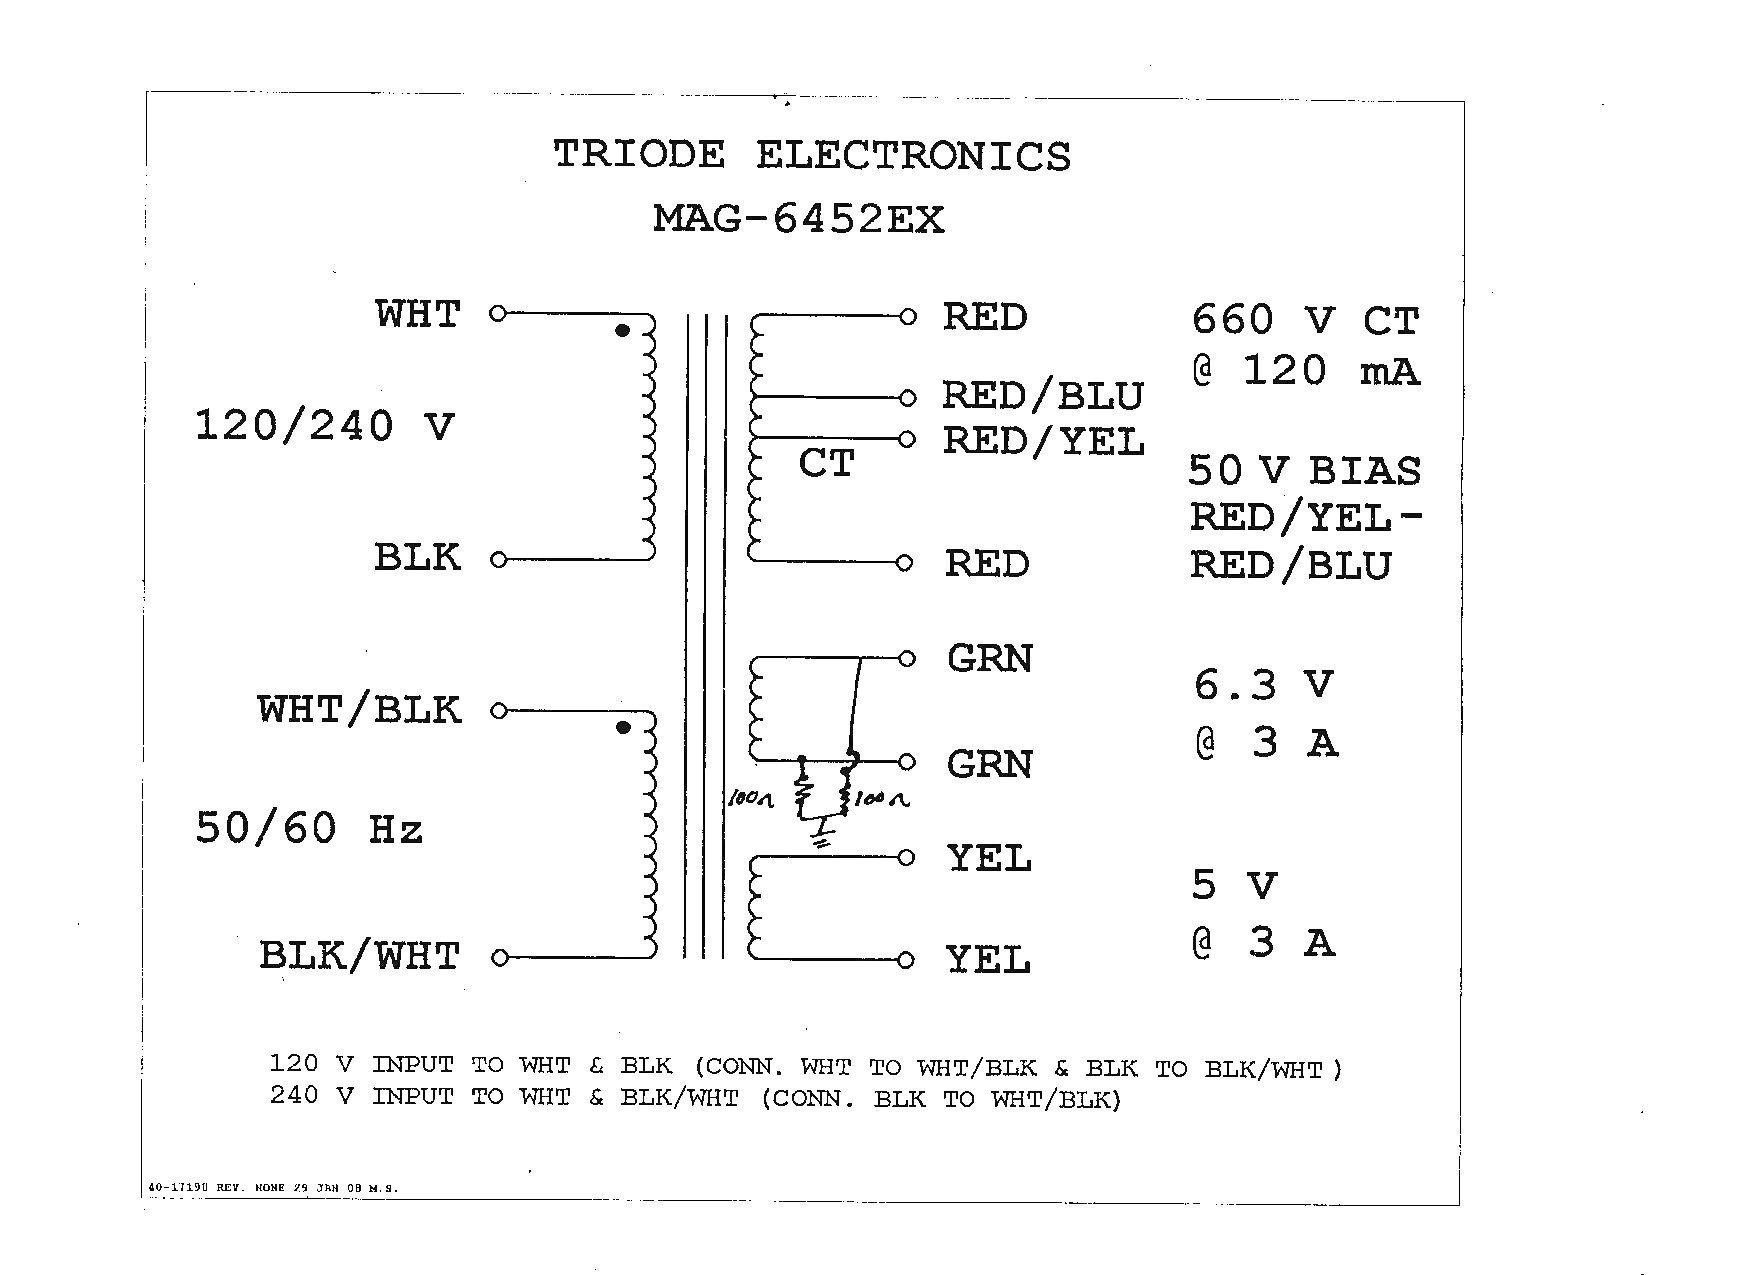 24 Volt Transformer Wiring Diagram Hvac Transformer Wiring Diagram Detailed Schematic Diagrams Of 24 Volt Transformer Wiring Diagram